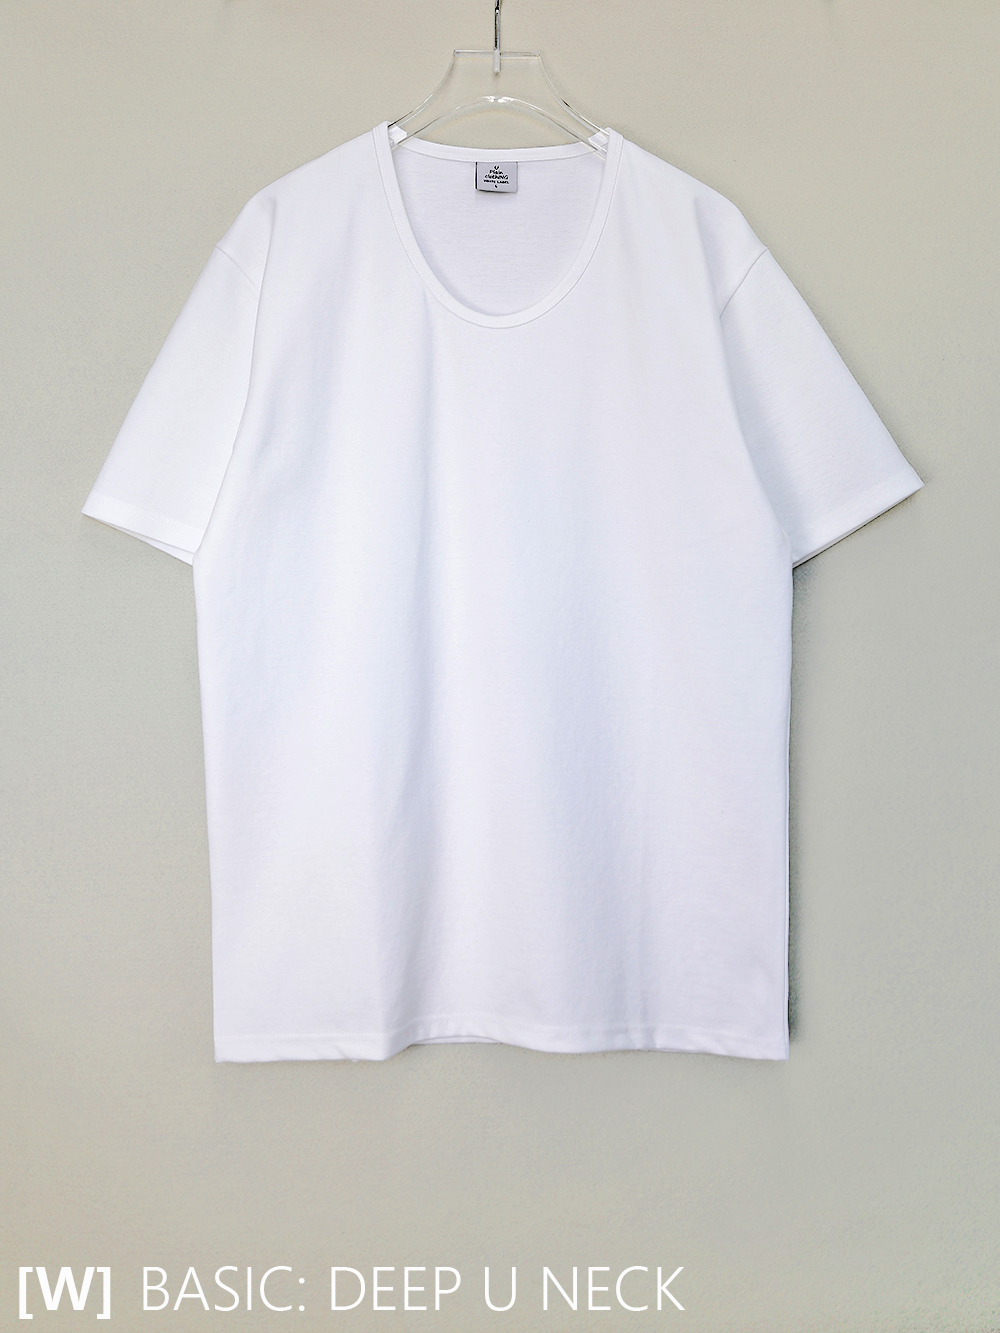 19-20ss [화이트라벨] 레귤러핏 딥유넥 티셔츠 - 5color /마지막 재고 상품/